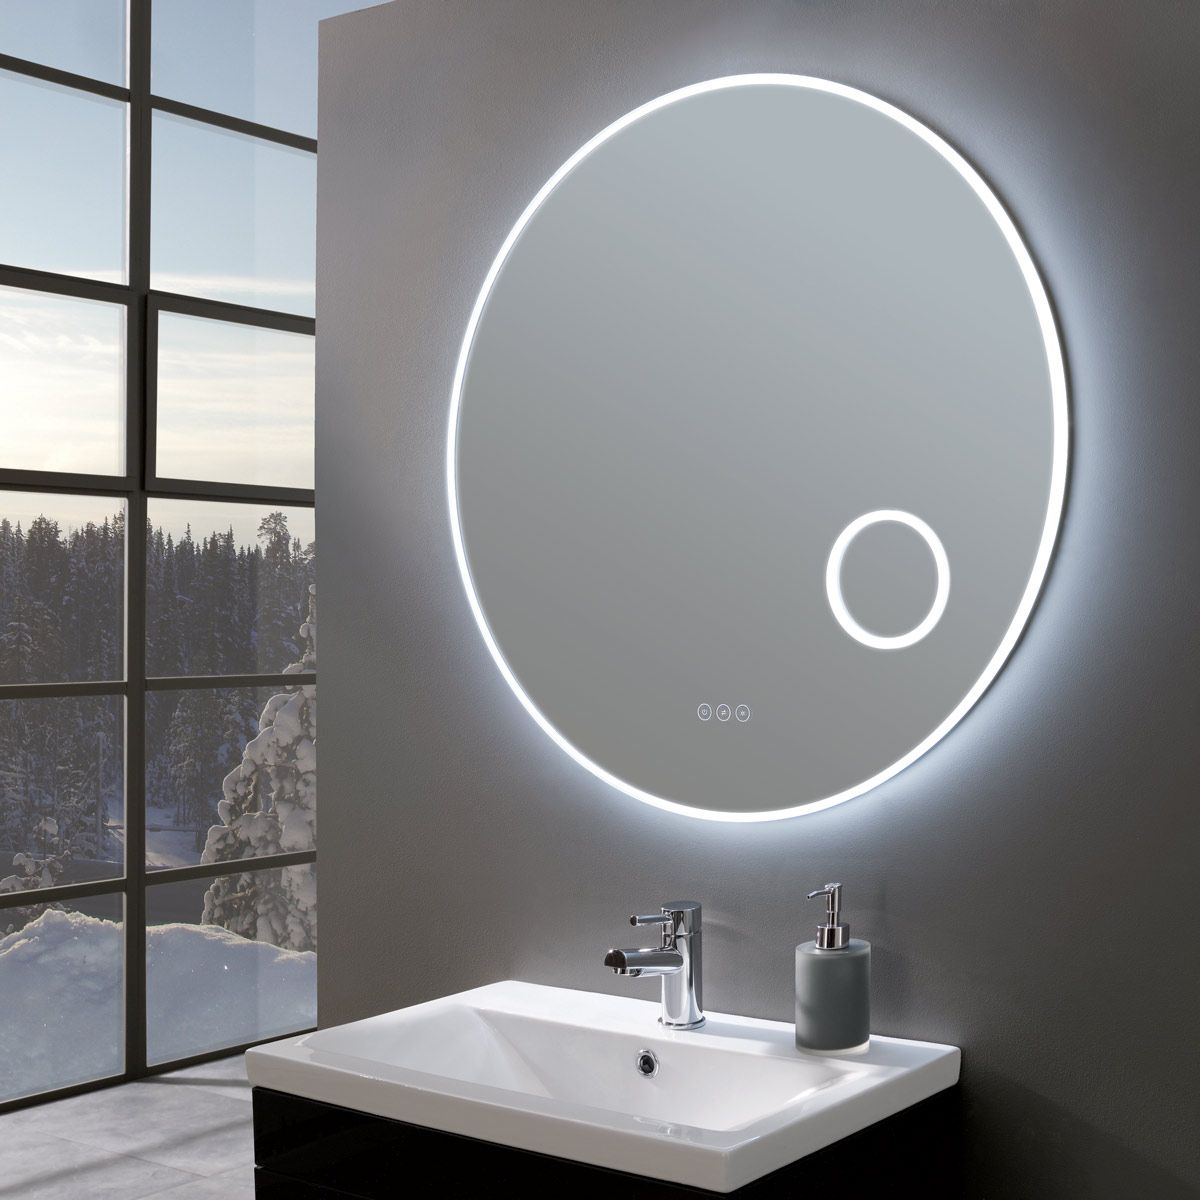 Ultra Slim Round Led Illuminated Mirror, Round Bathroom Mirror With Storage And Light